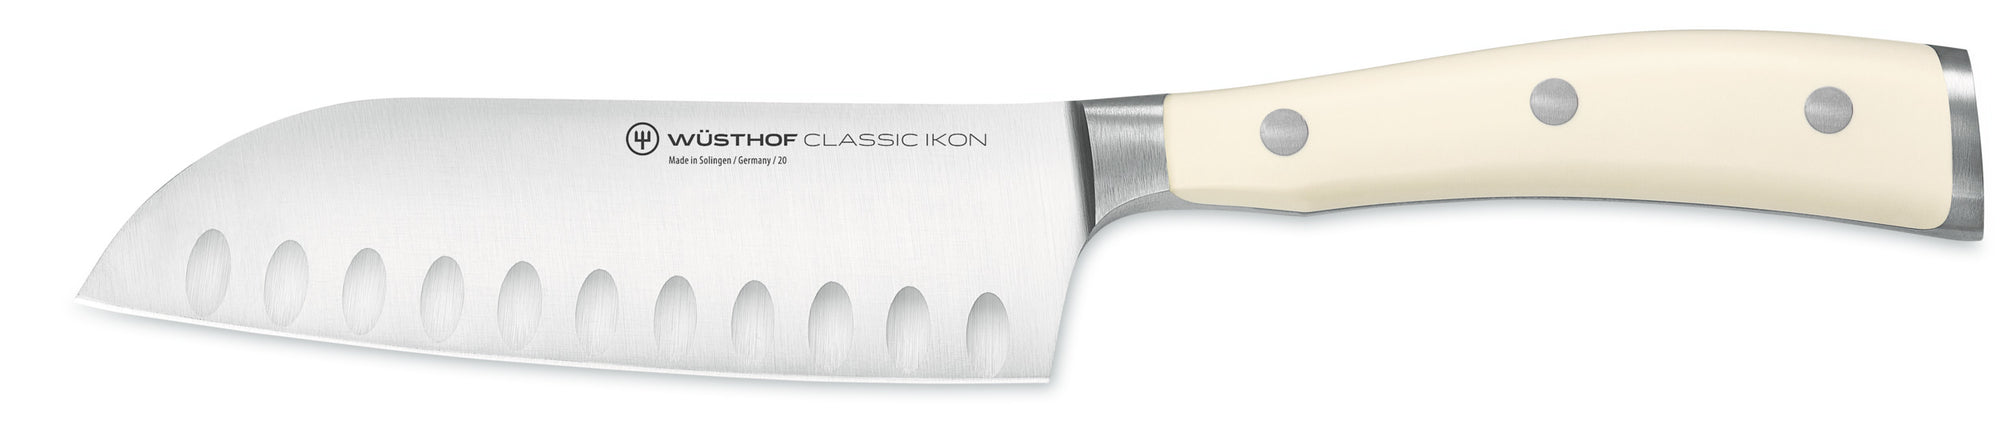 Wusthof Classic IKON 5.5-inch (14cm) Santoku Knife, Creme, Granton Edge - 4172